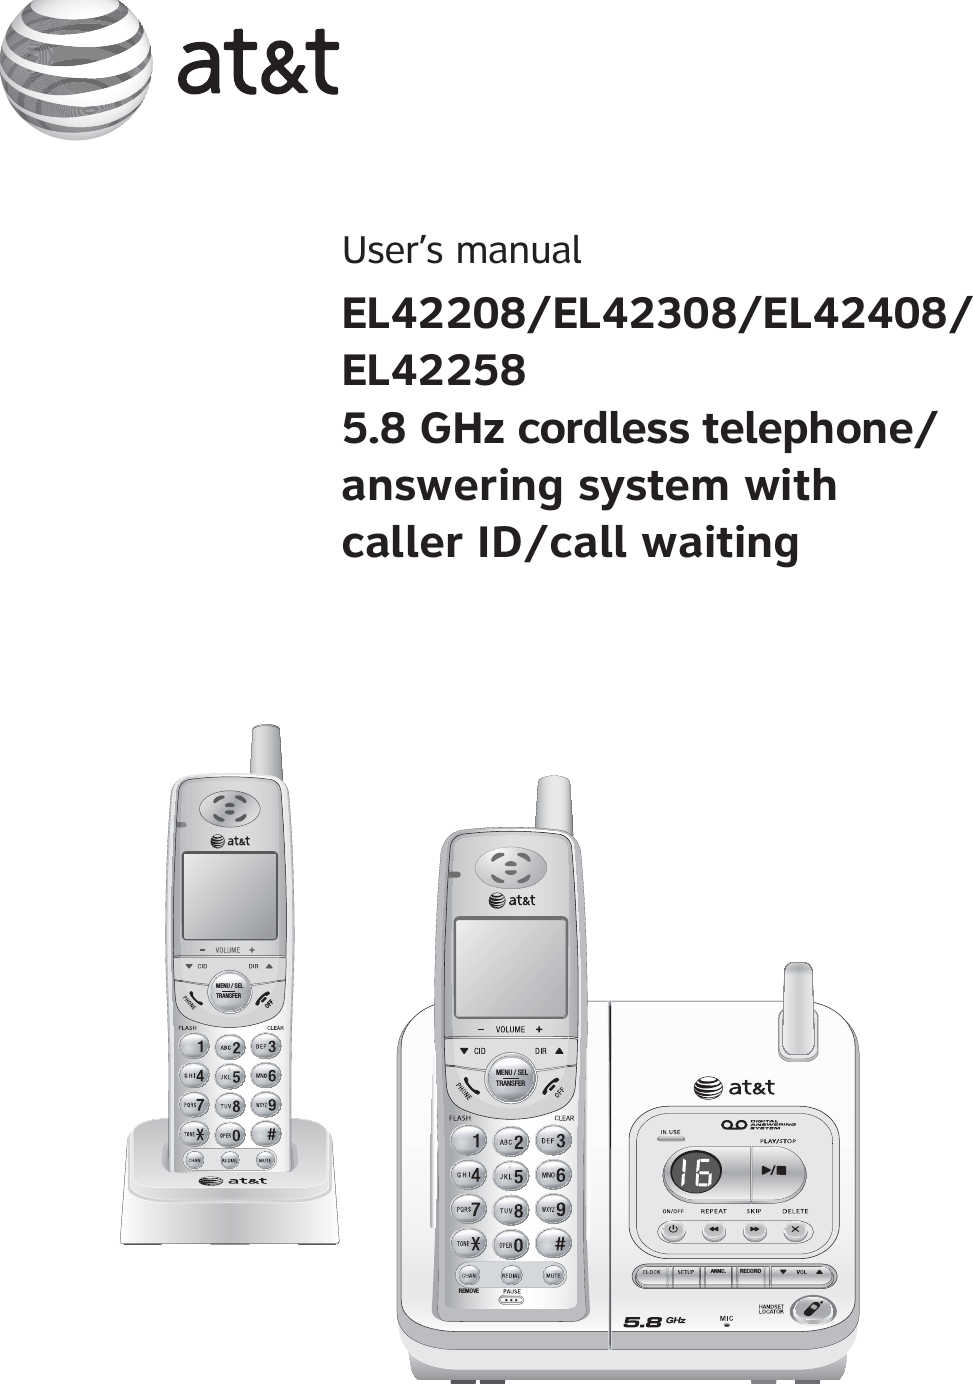 User’s manualEL42208/EL42308/EL42408/EL422585.8 GHz cordless telephone/answering system with caller ID/call waitingRECORDANNC.REMOVEMENU / SELTRANSFERMENU / SELTRANSFER